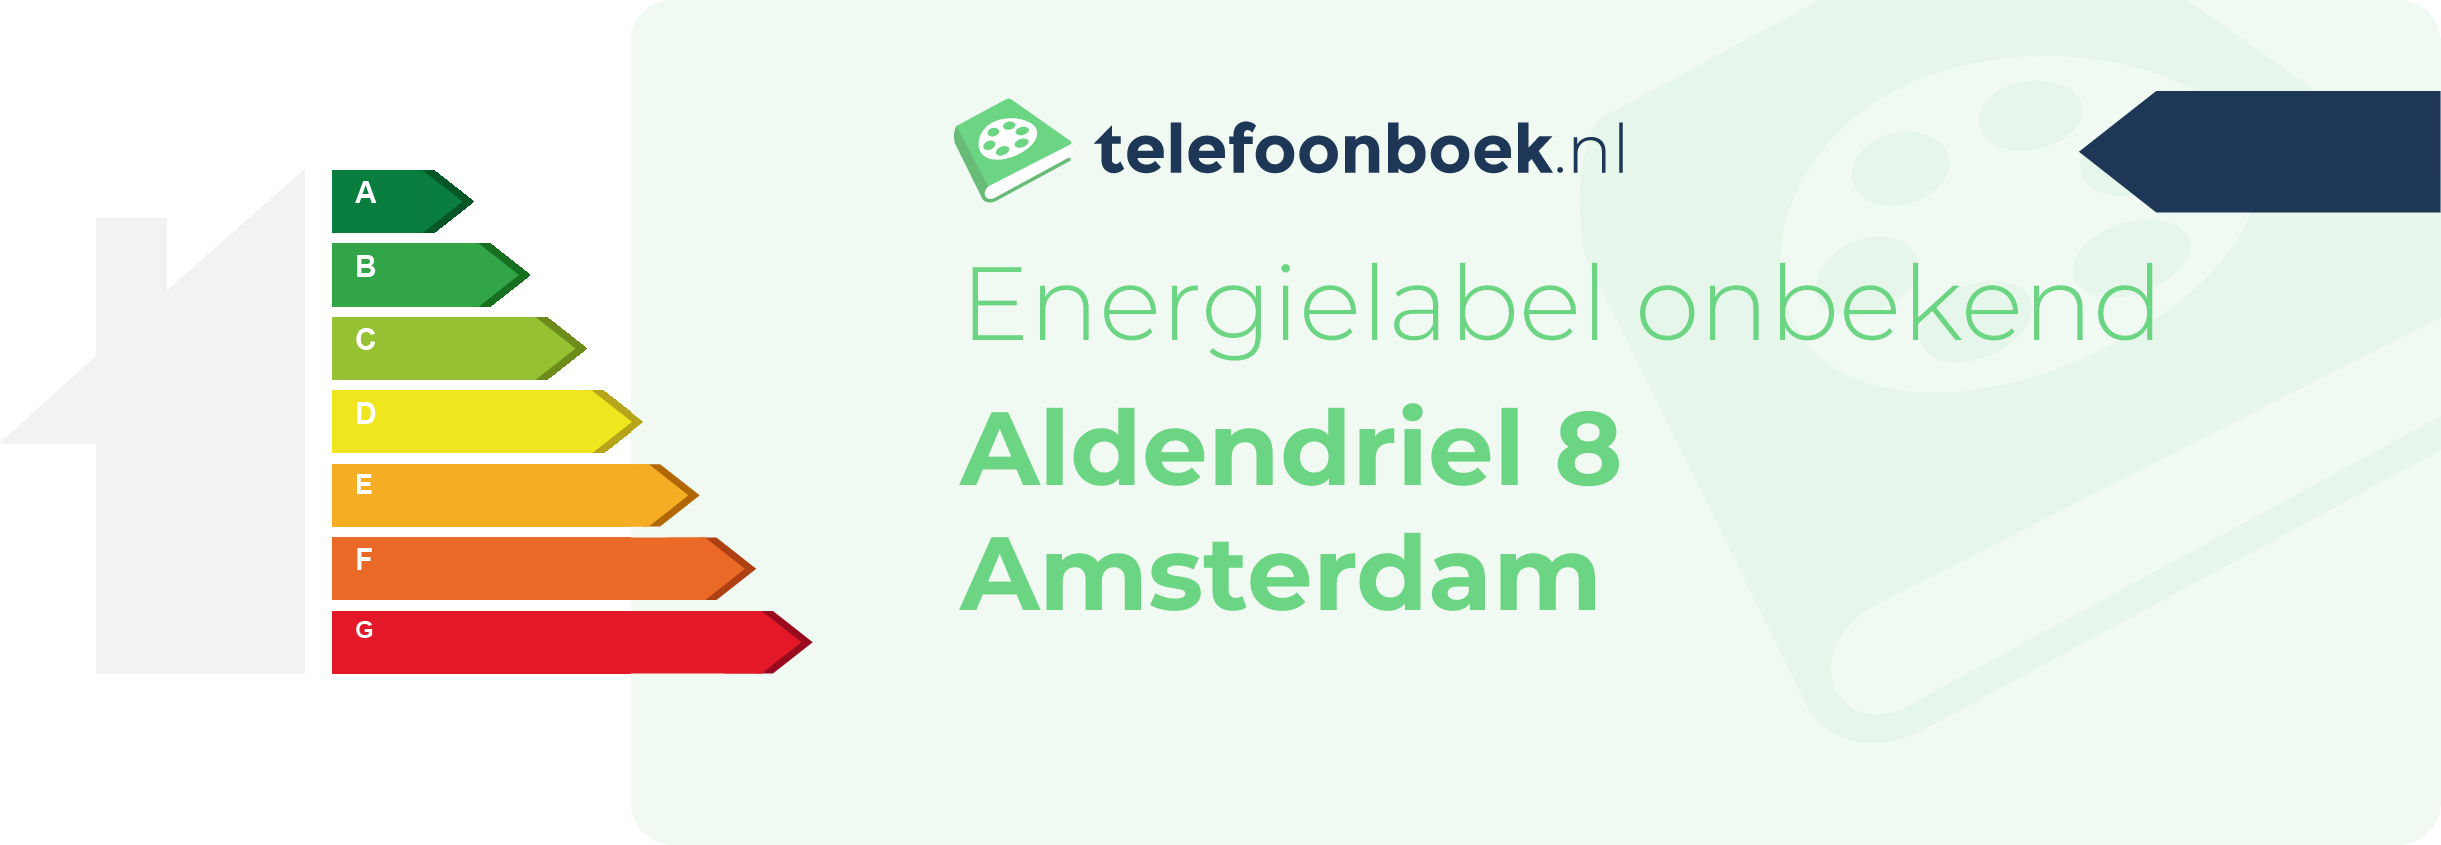 Energielabel Aldendriel 8 Amsterdam